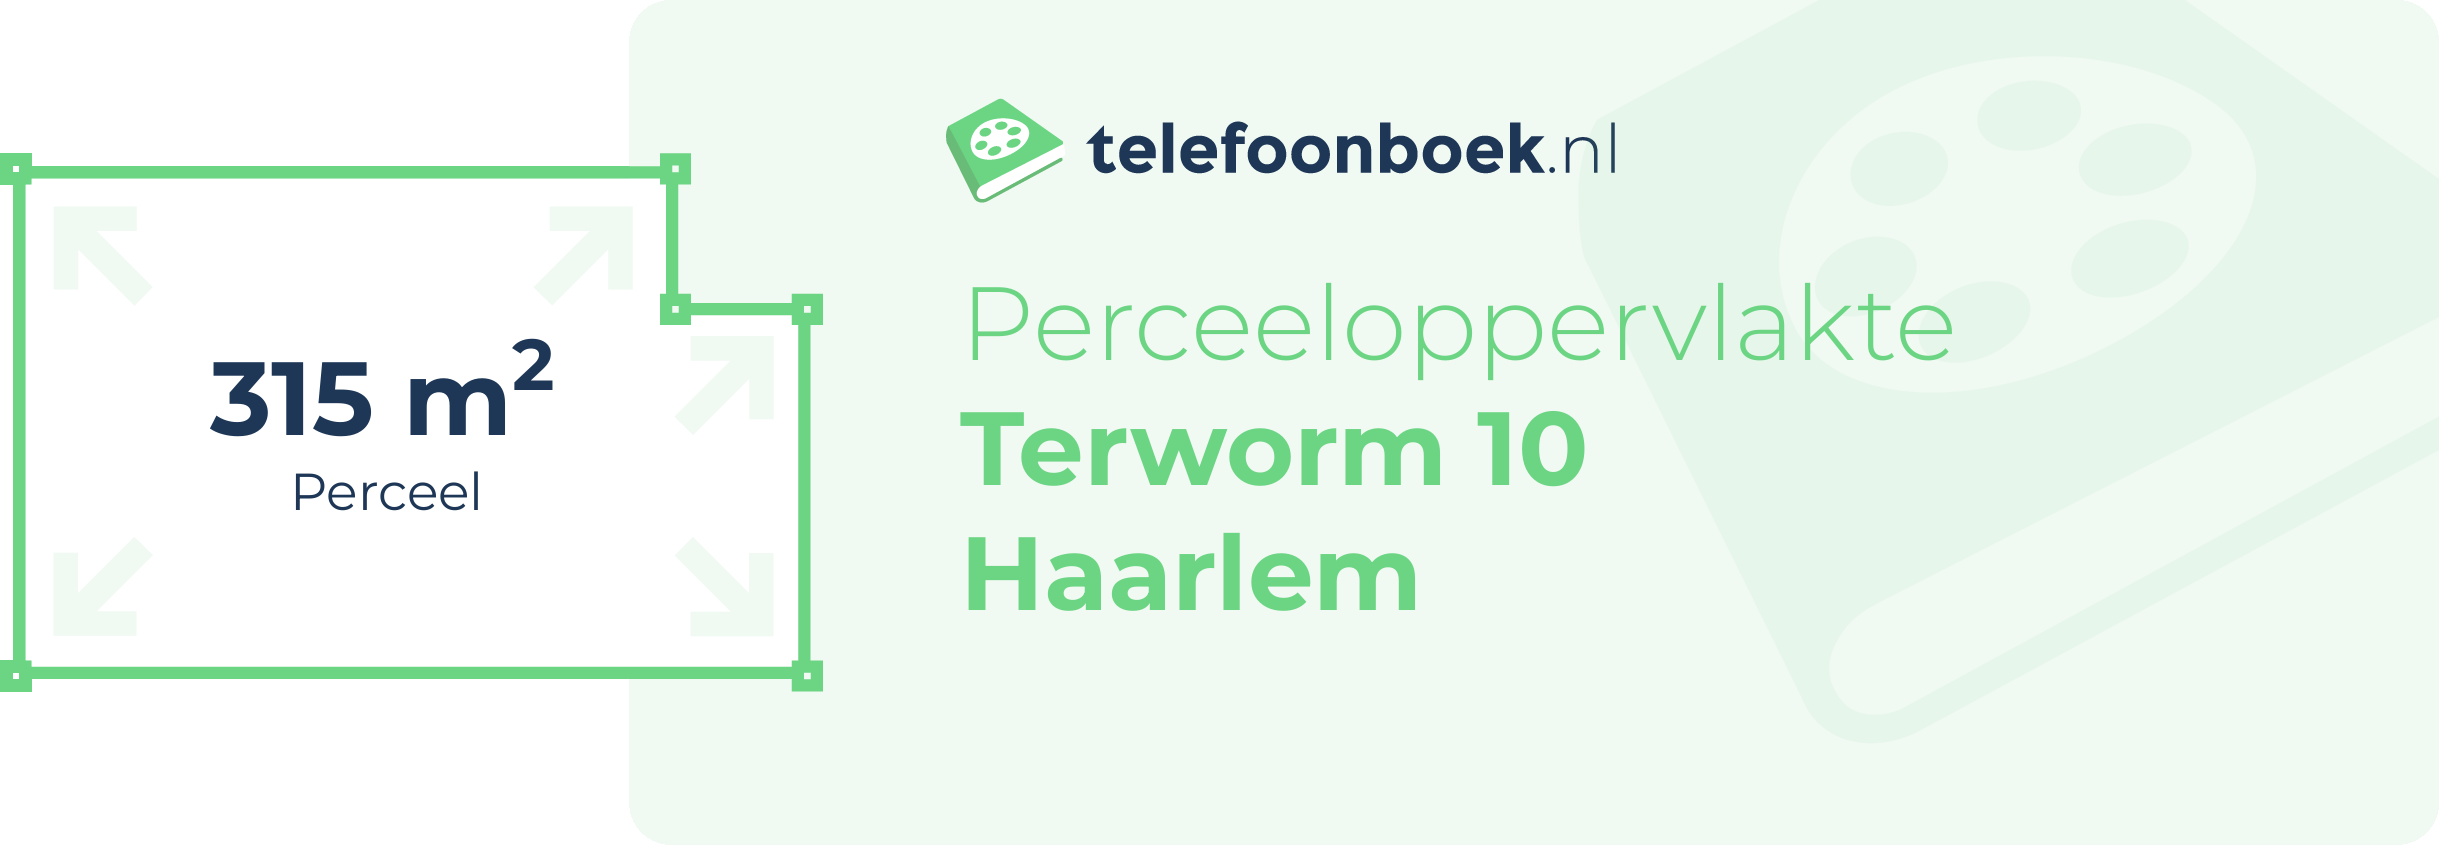 Perceeloppervlakte Terworm 10 Haarlem